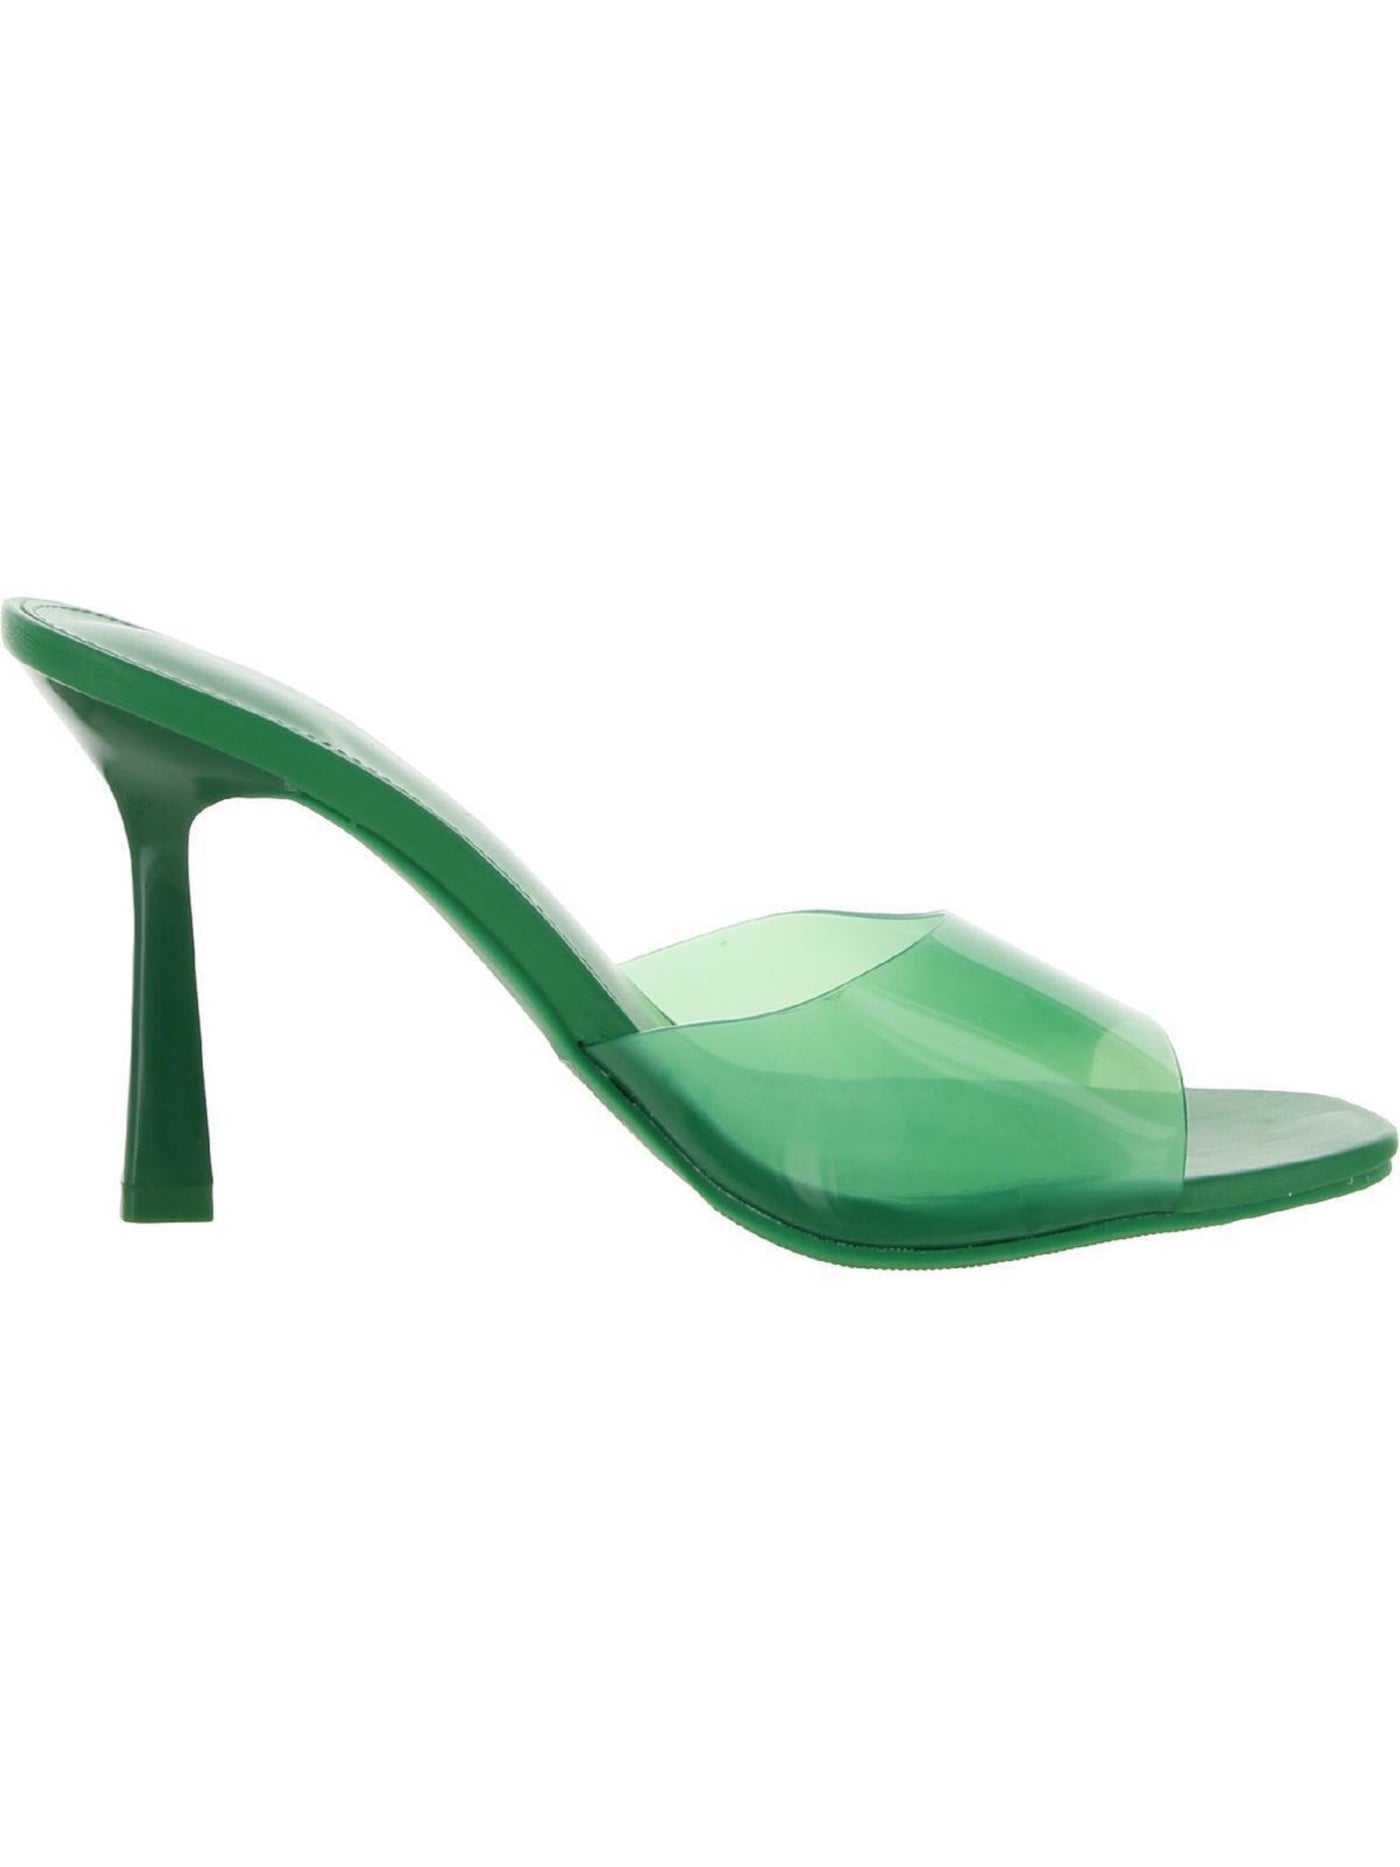 WILD PAIR Womens Green Transparent Padded Slip Resistant Luuna Round Toe Stiletto Slip On Heeled Sandal 7 M